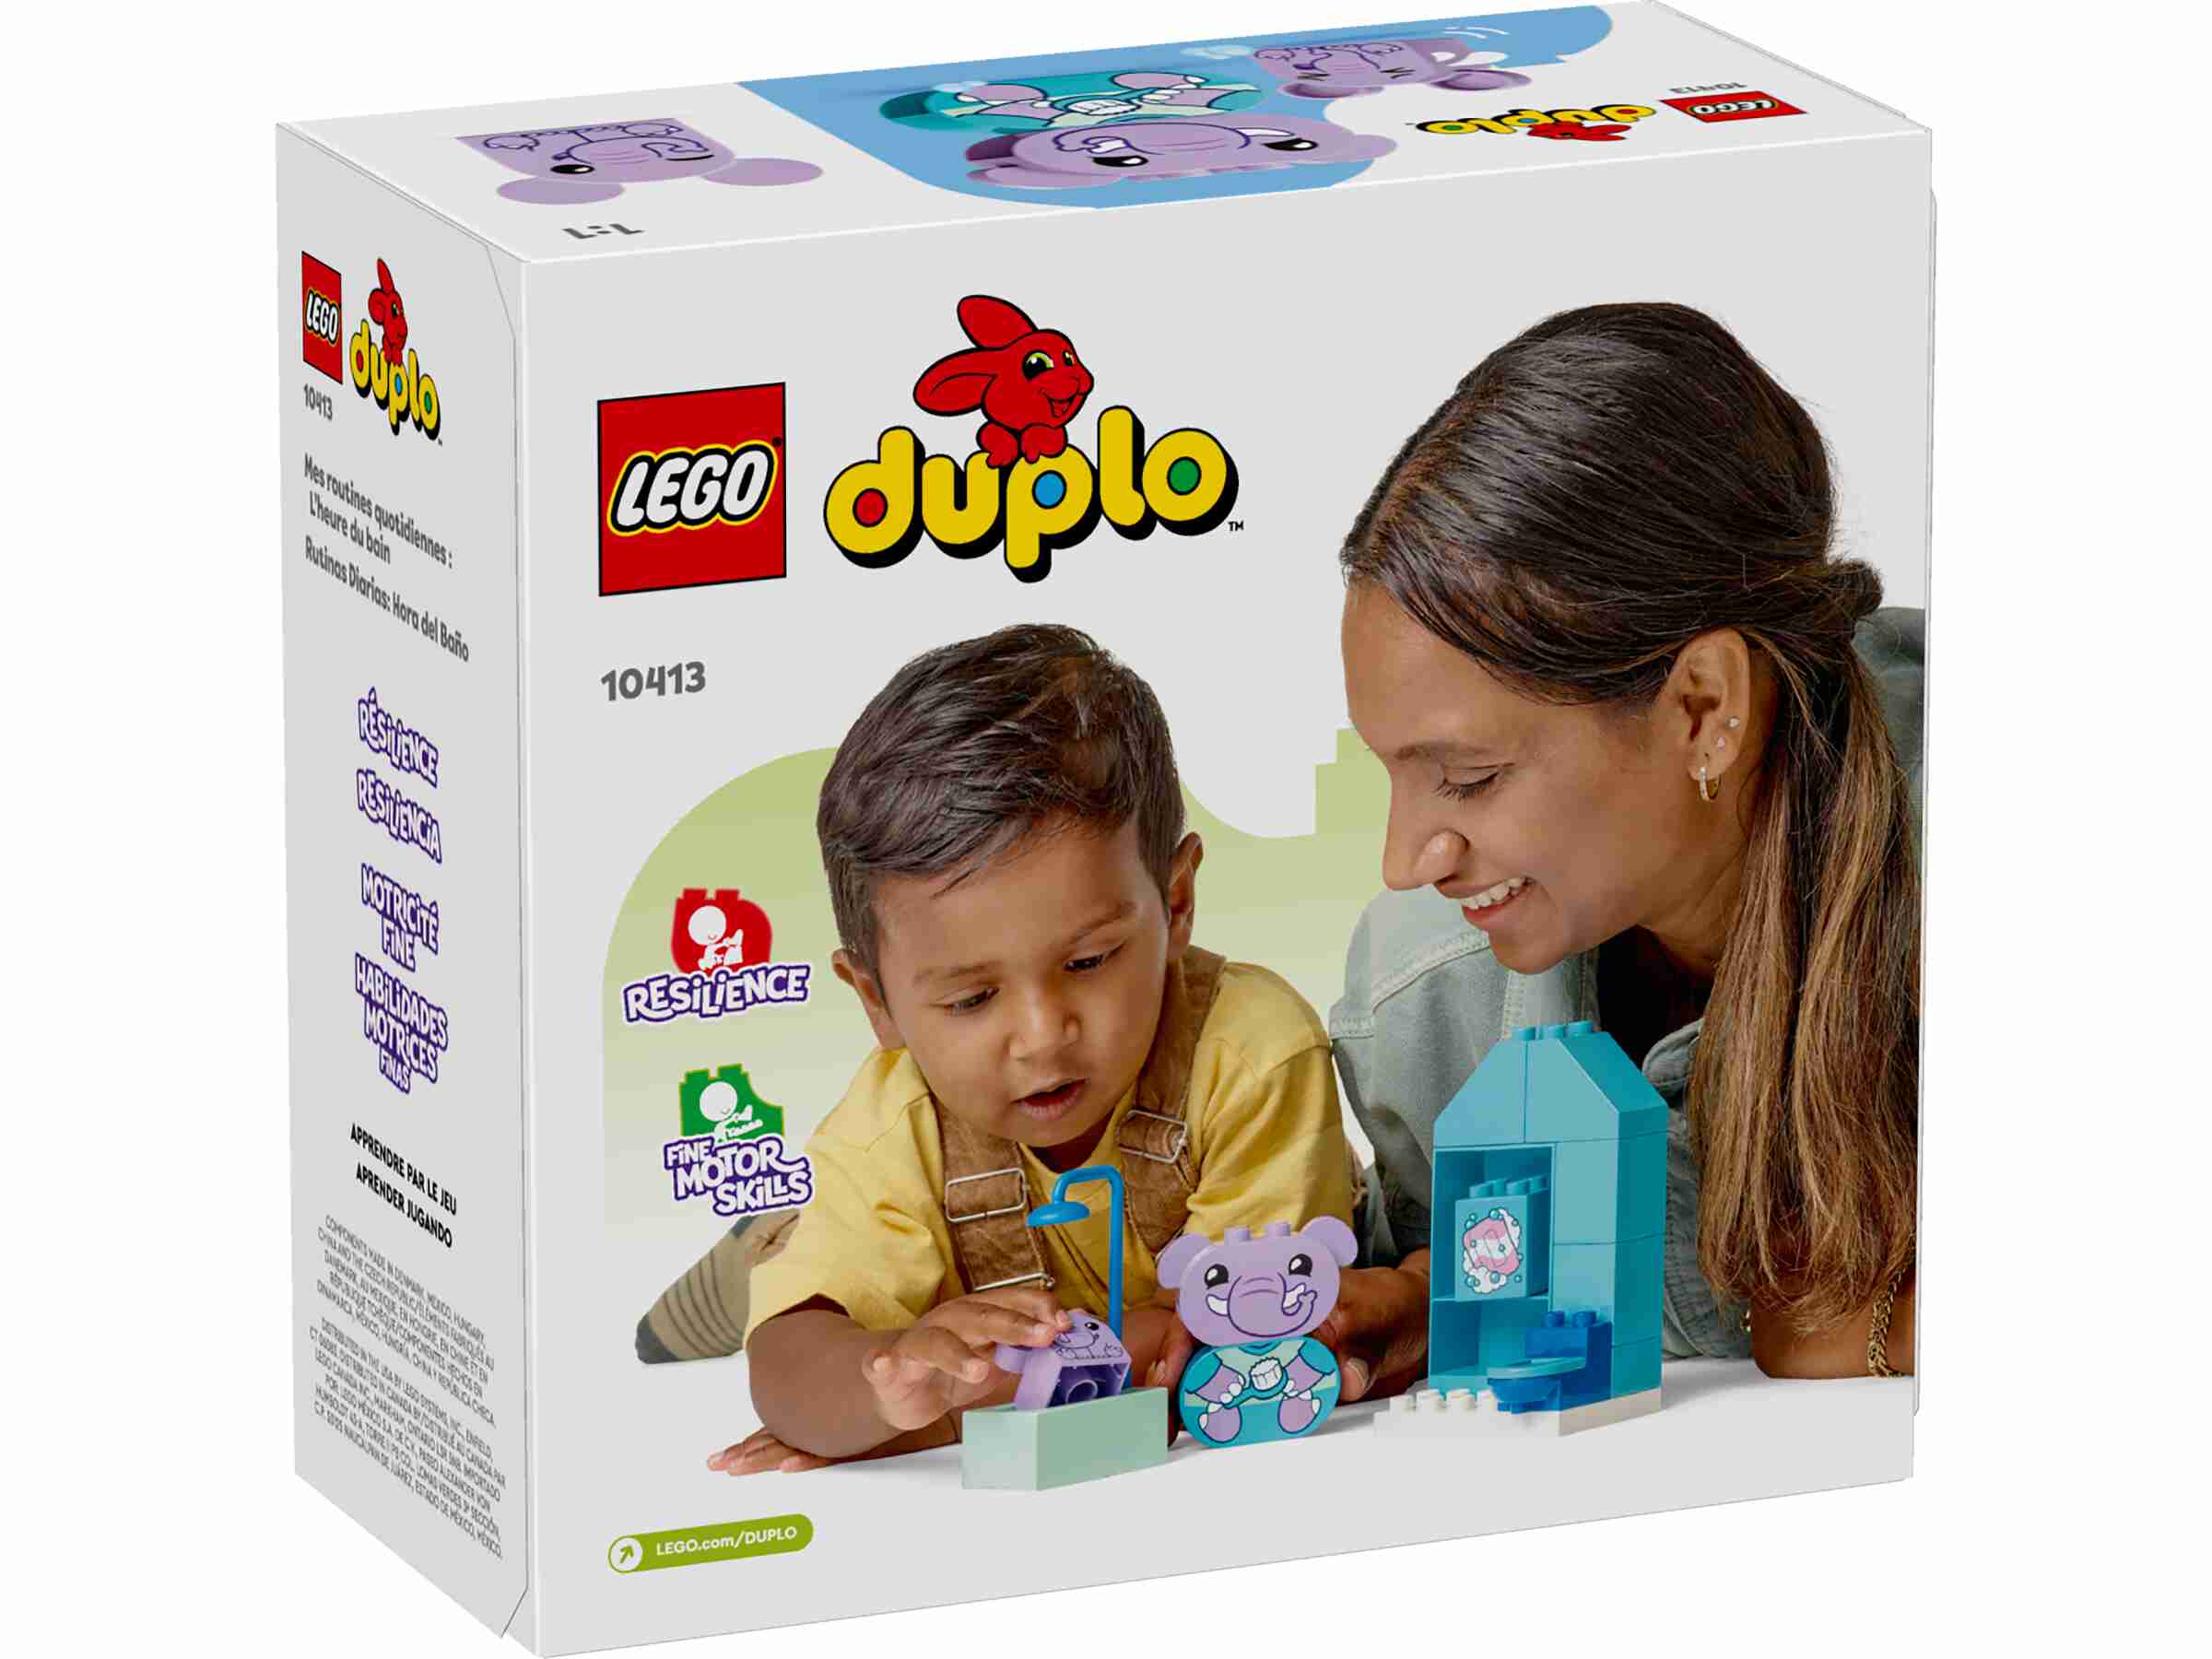 LEGO 10413 DUPLO Alltragsroutinen: Baden, 2 Spielzeugelefanten, Dusche, Toilette